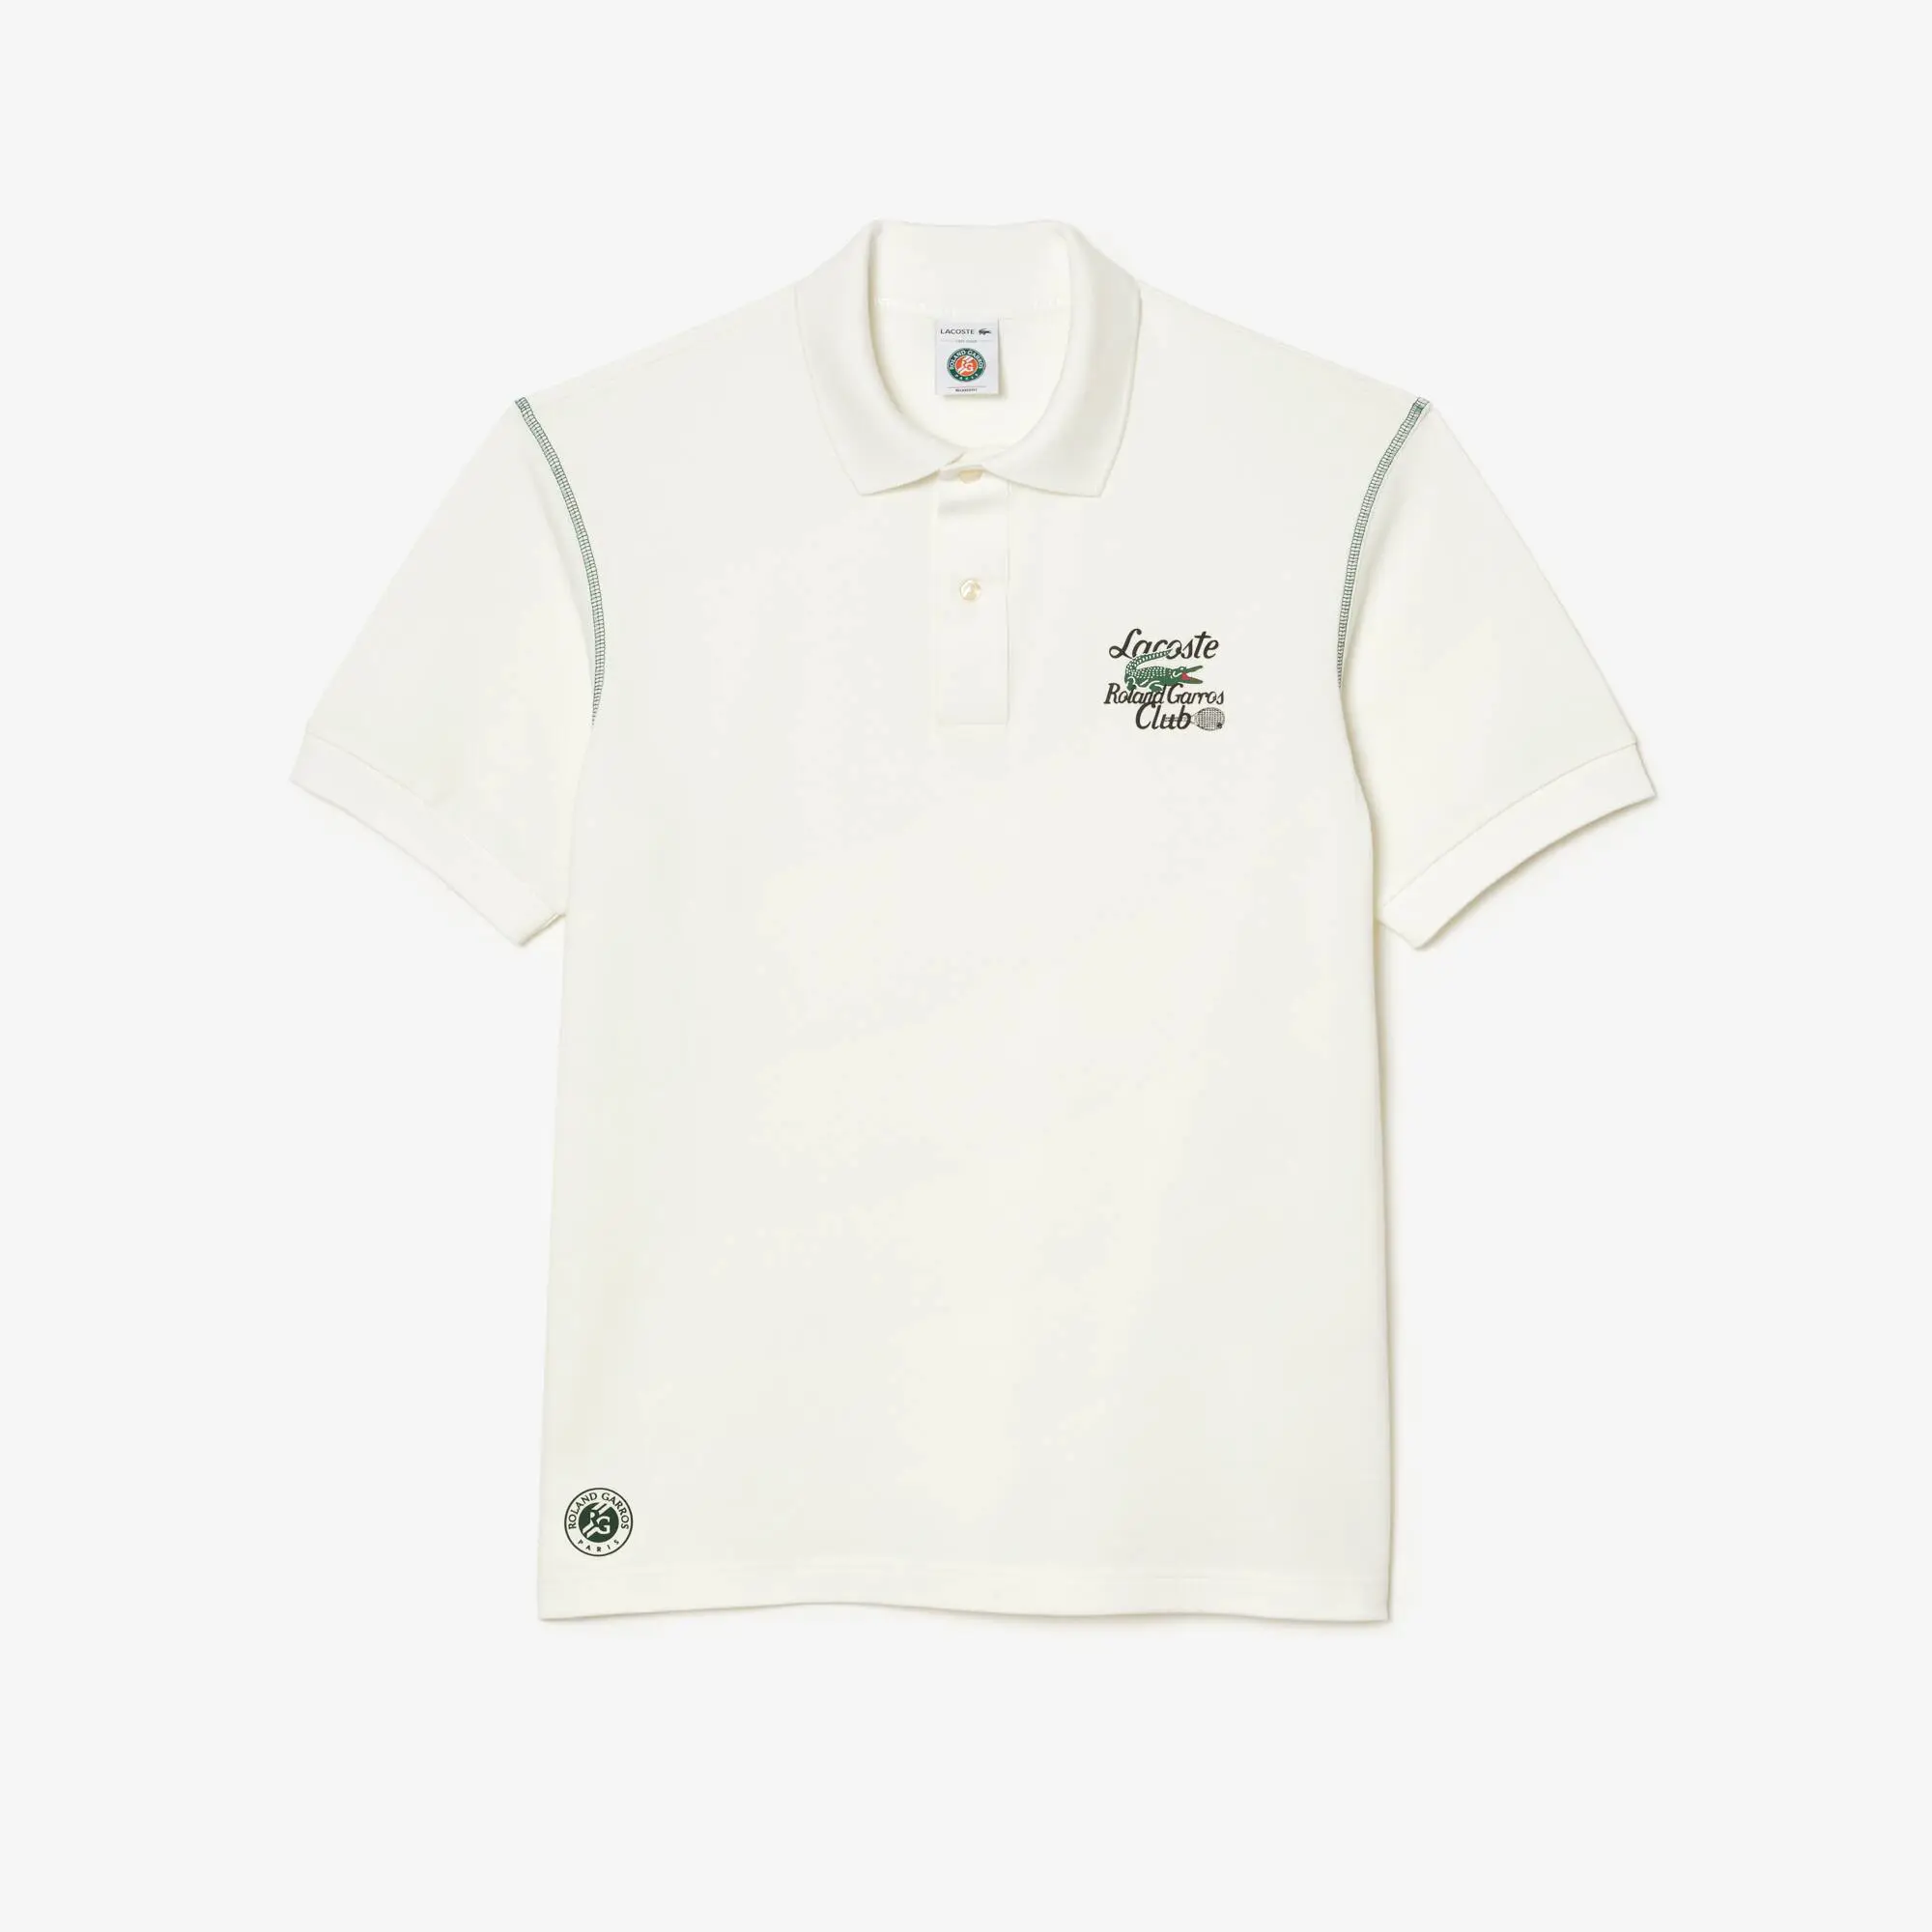 Lacoste Men’s Lacoste Sport Roland Garros Edition Piqué Polo Shirt. 2